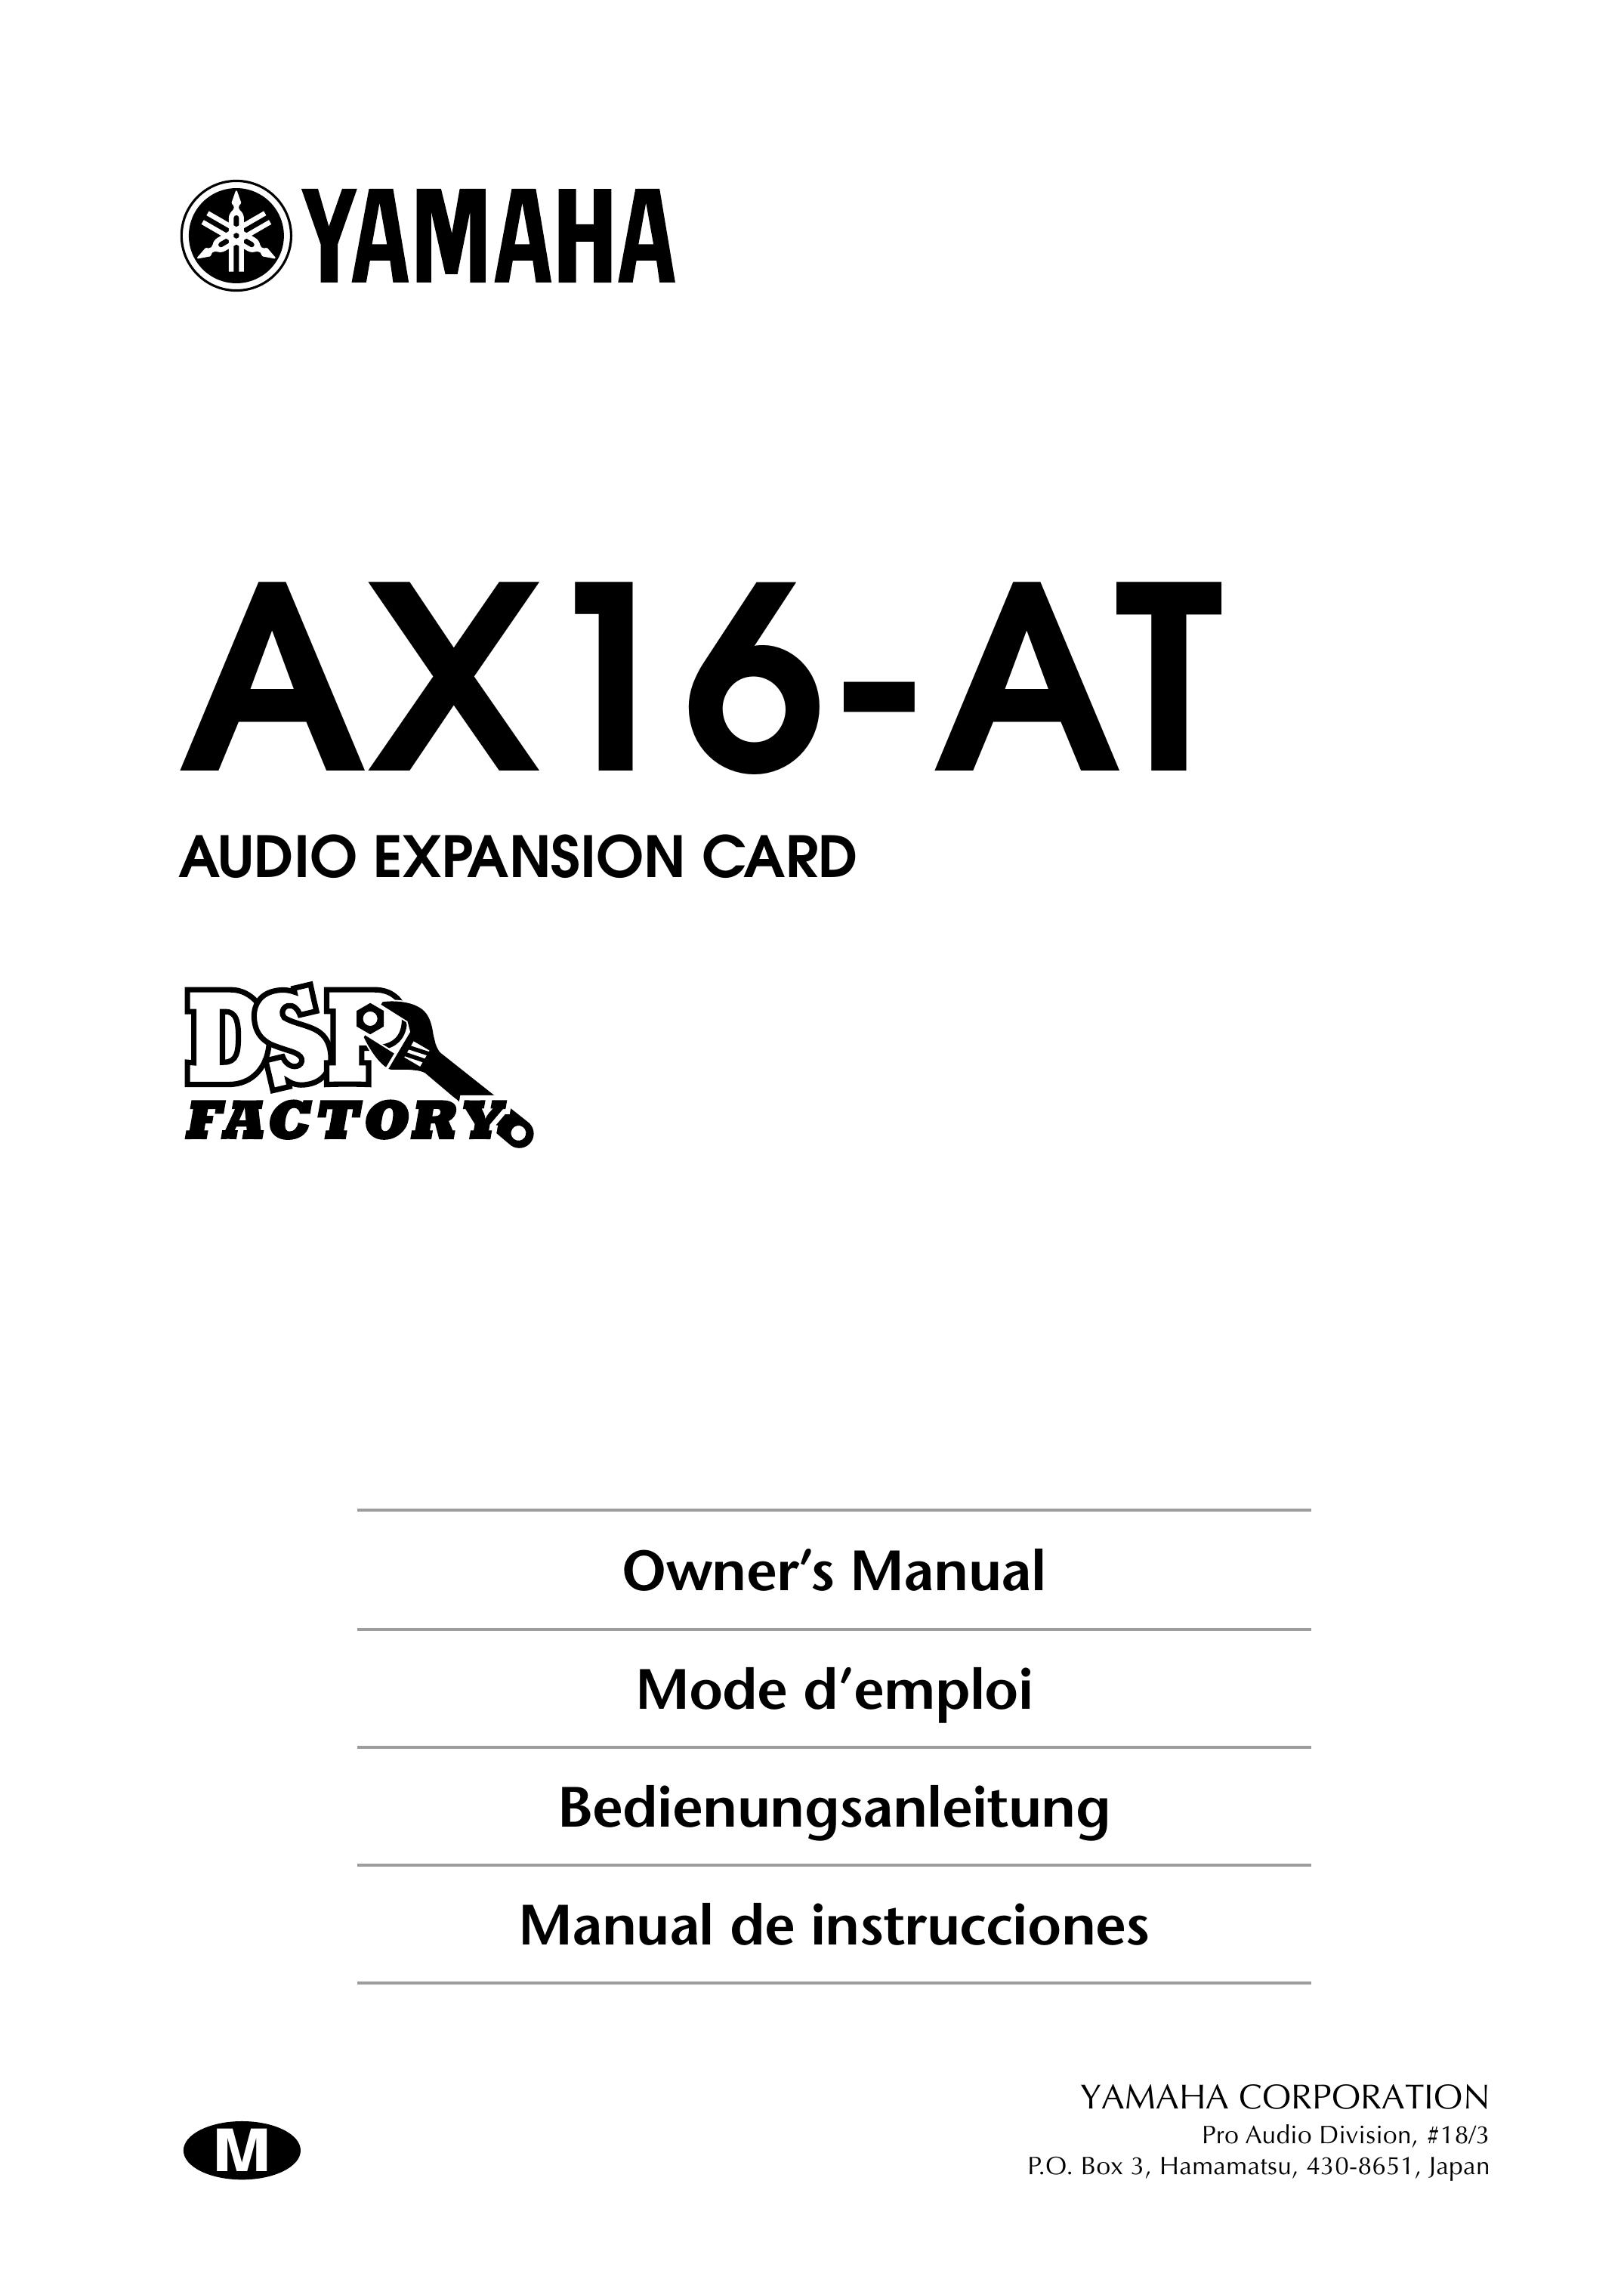 Yamaha AX16-AT Music Mixer User Manual